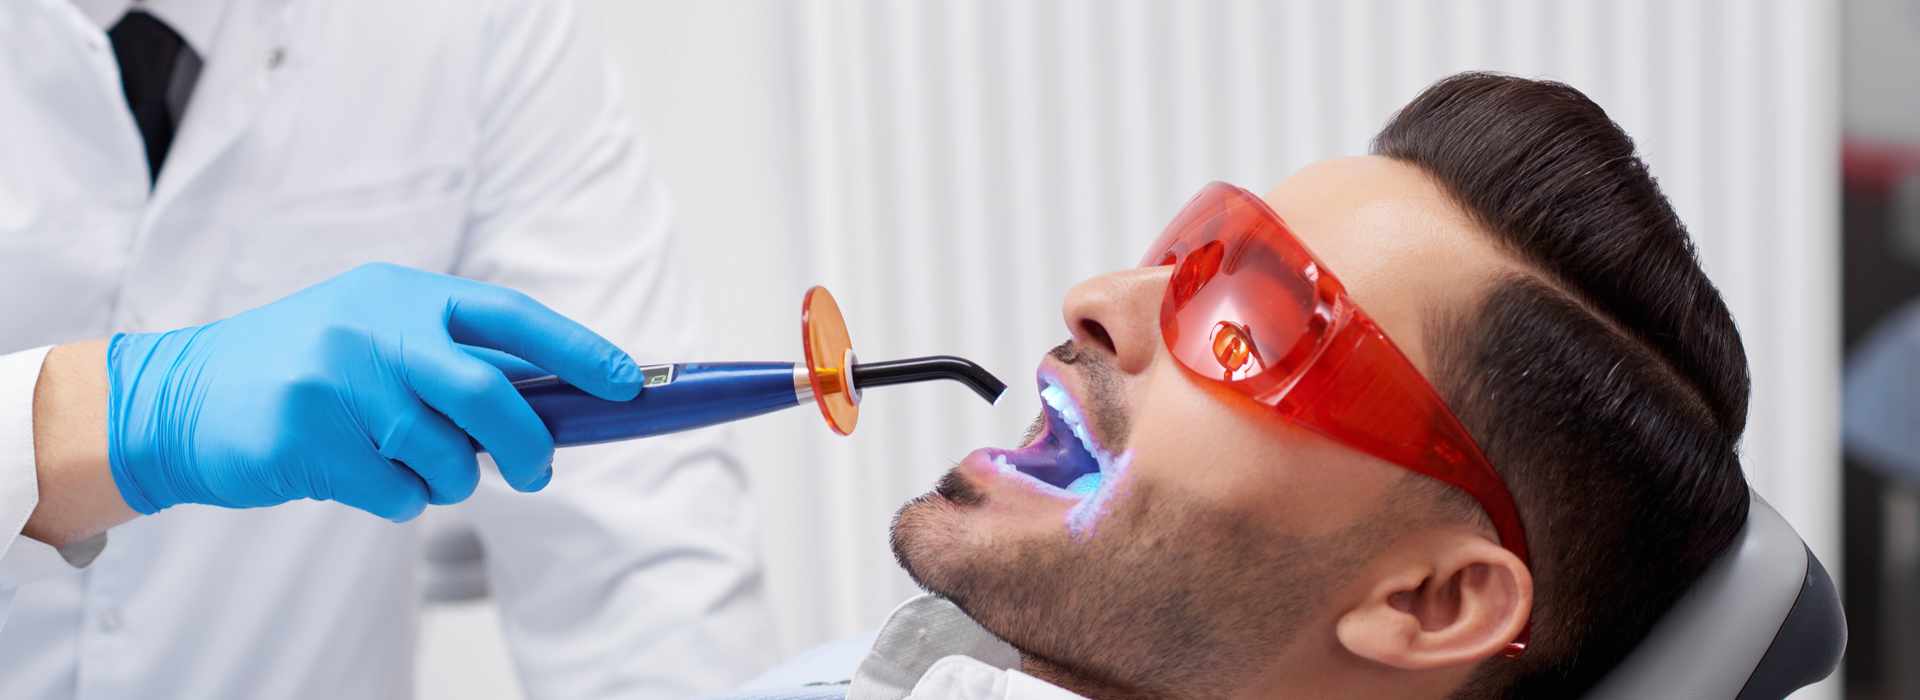 A man is having teeth whitening treatment.